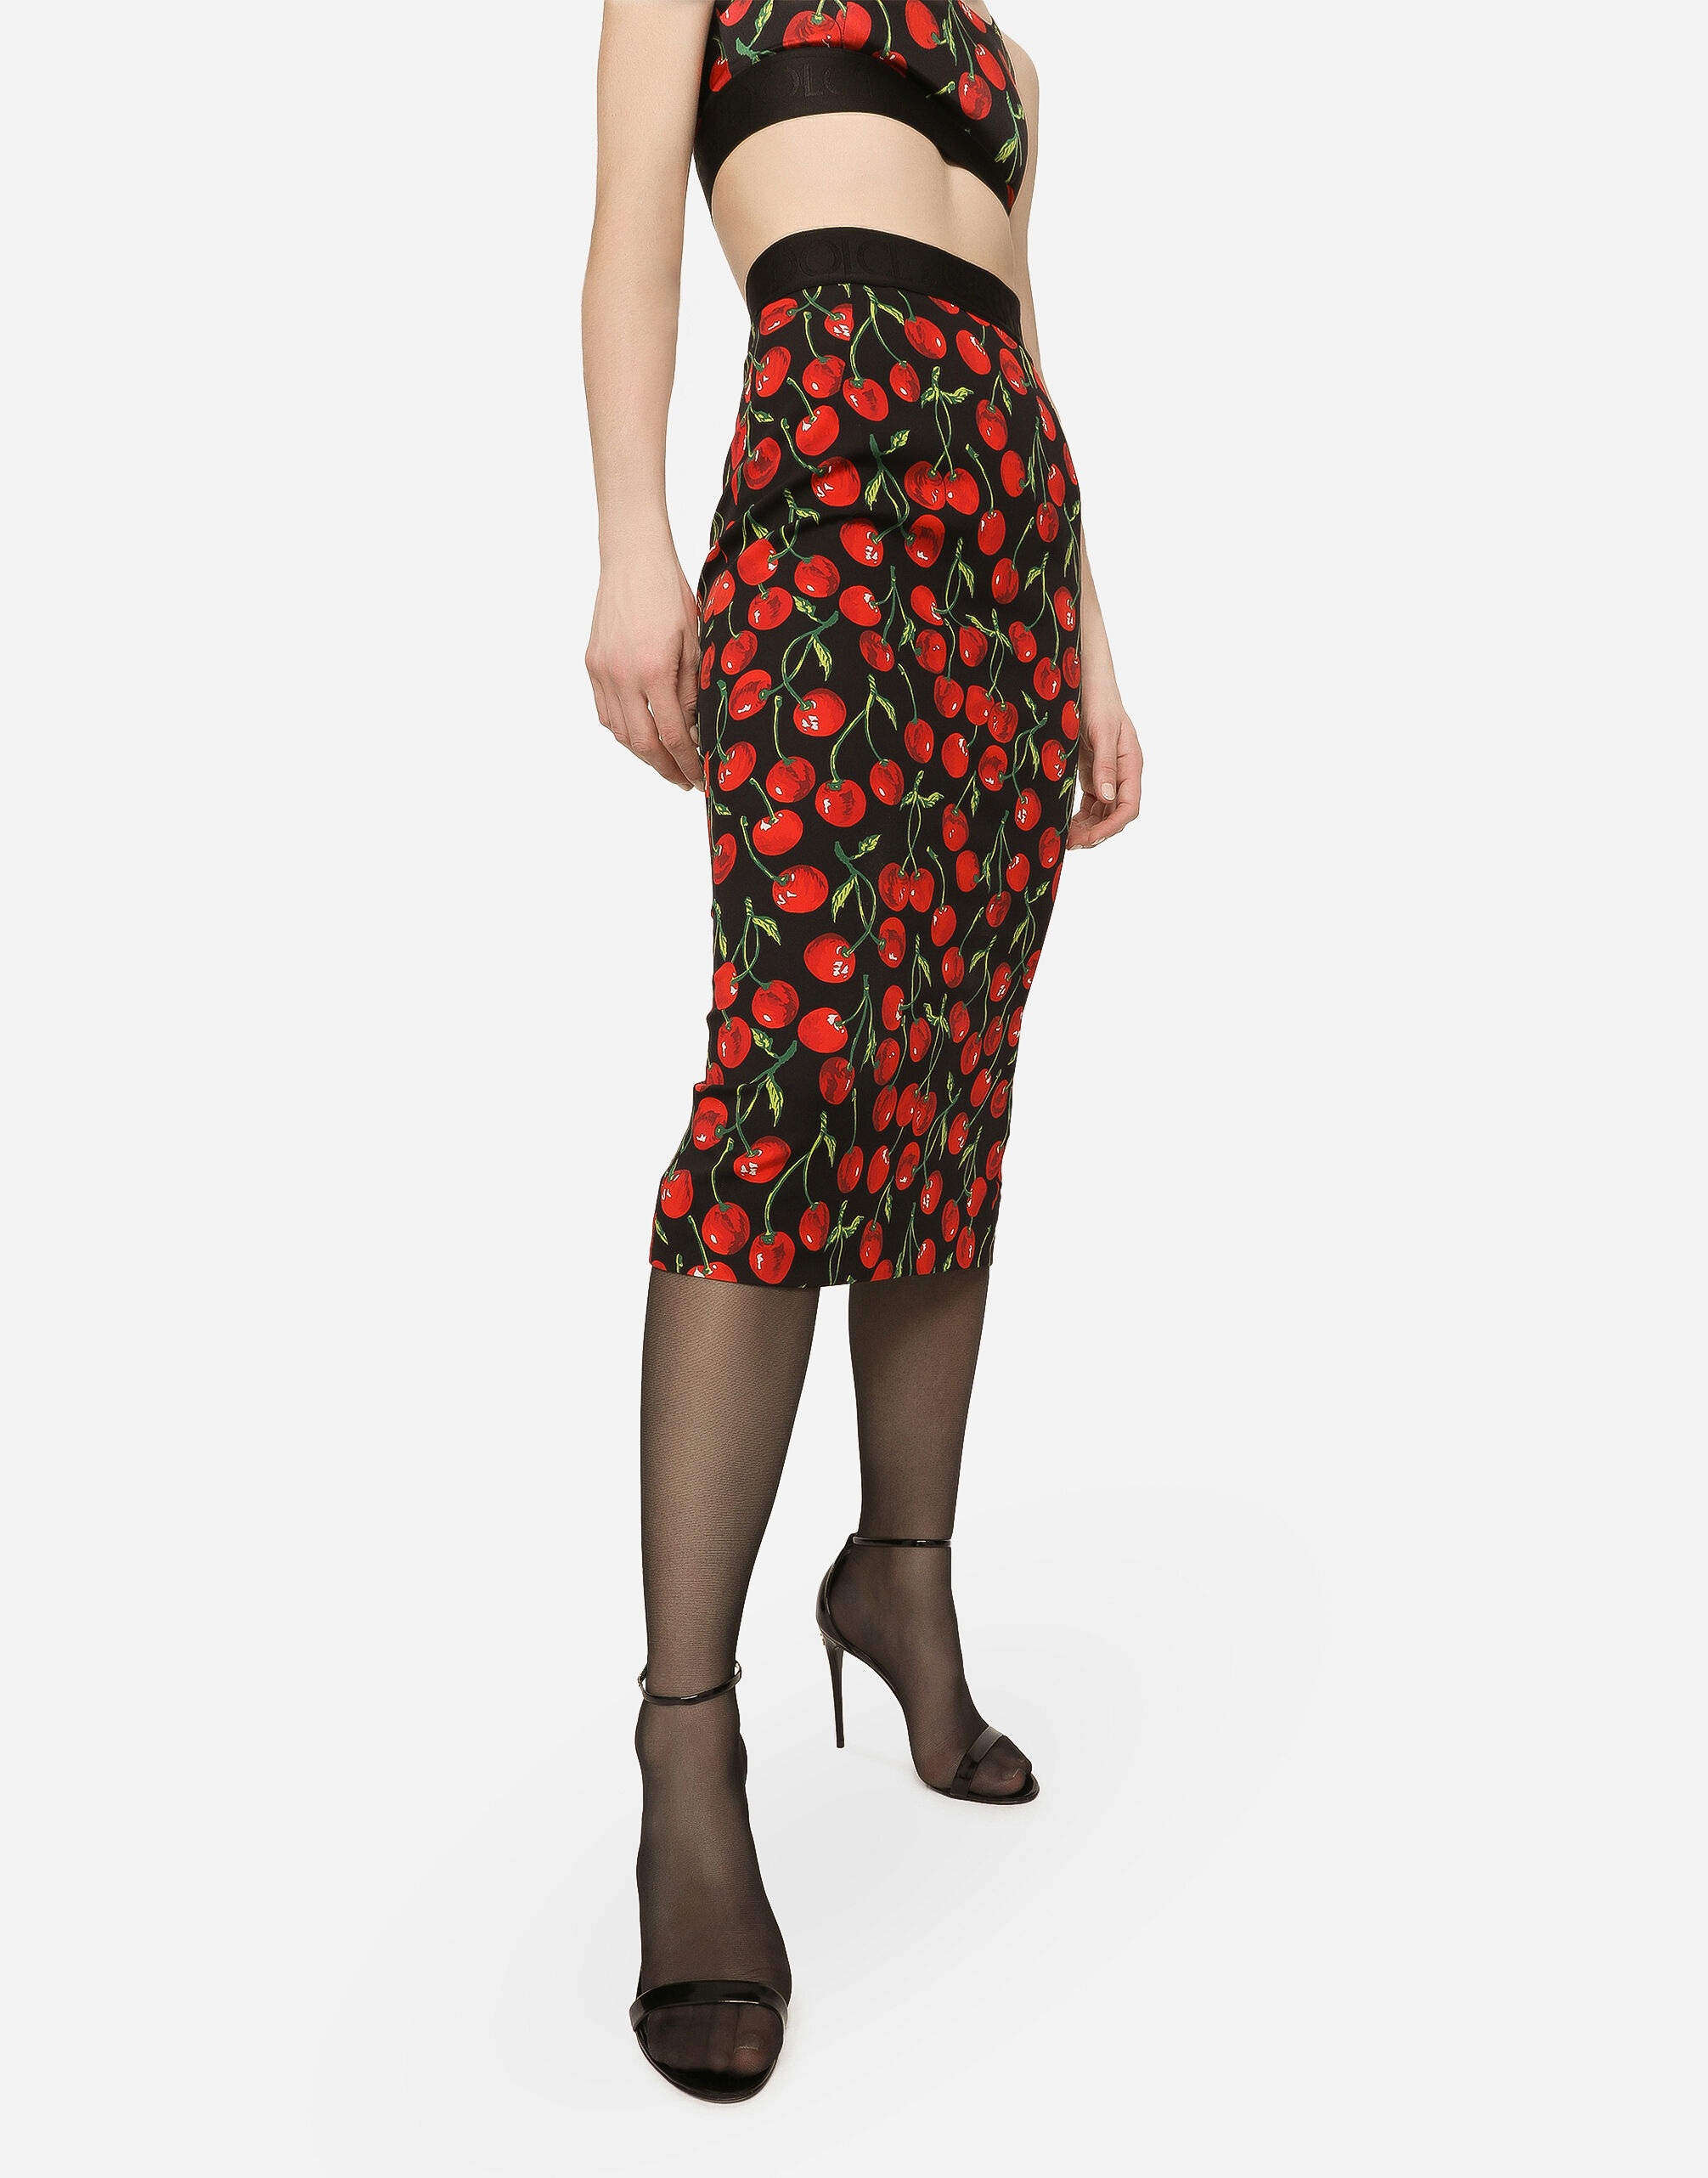 High-waisted charmeuse calf-length skirt with cherry print in 